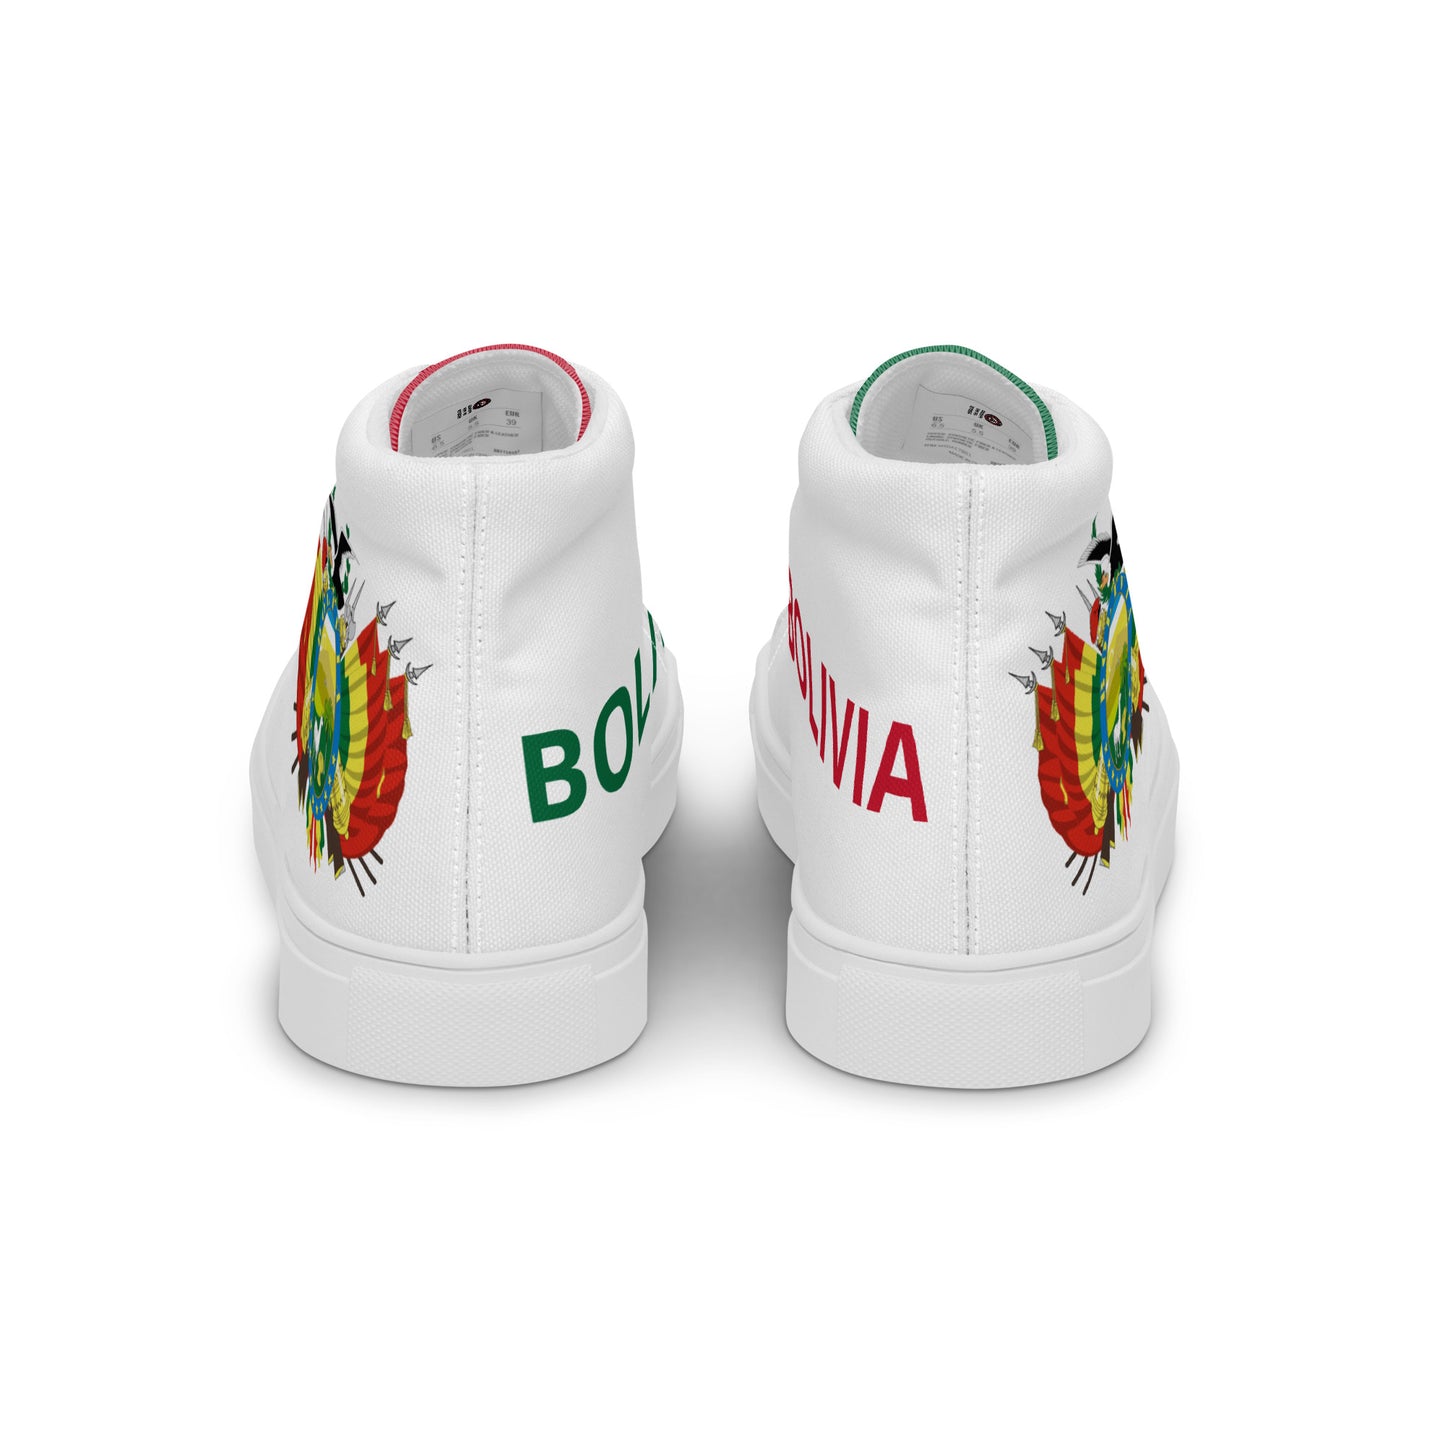 Bolivia - Women - White - High top shoes